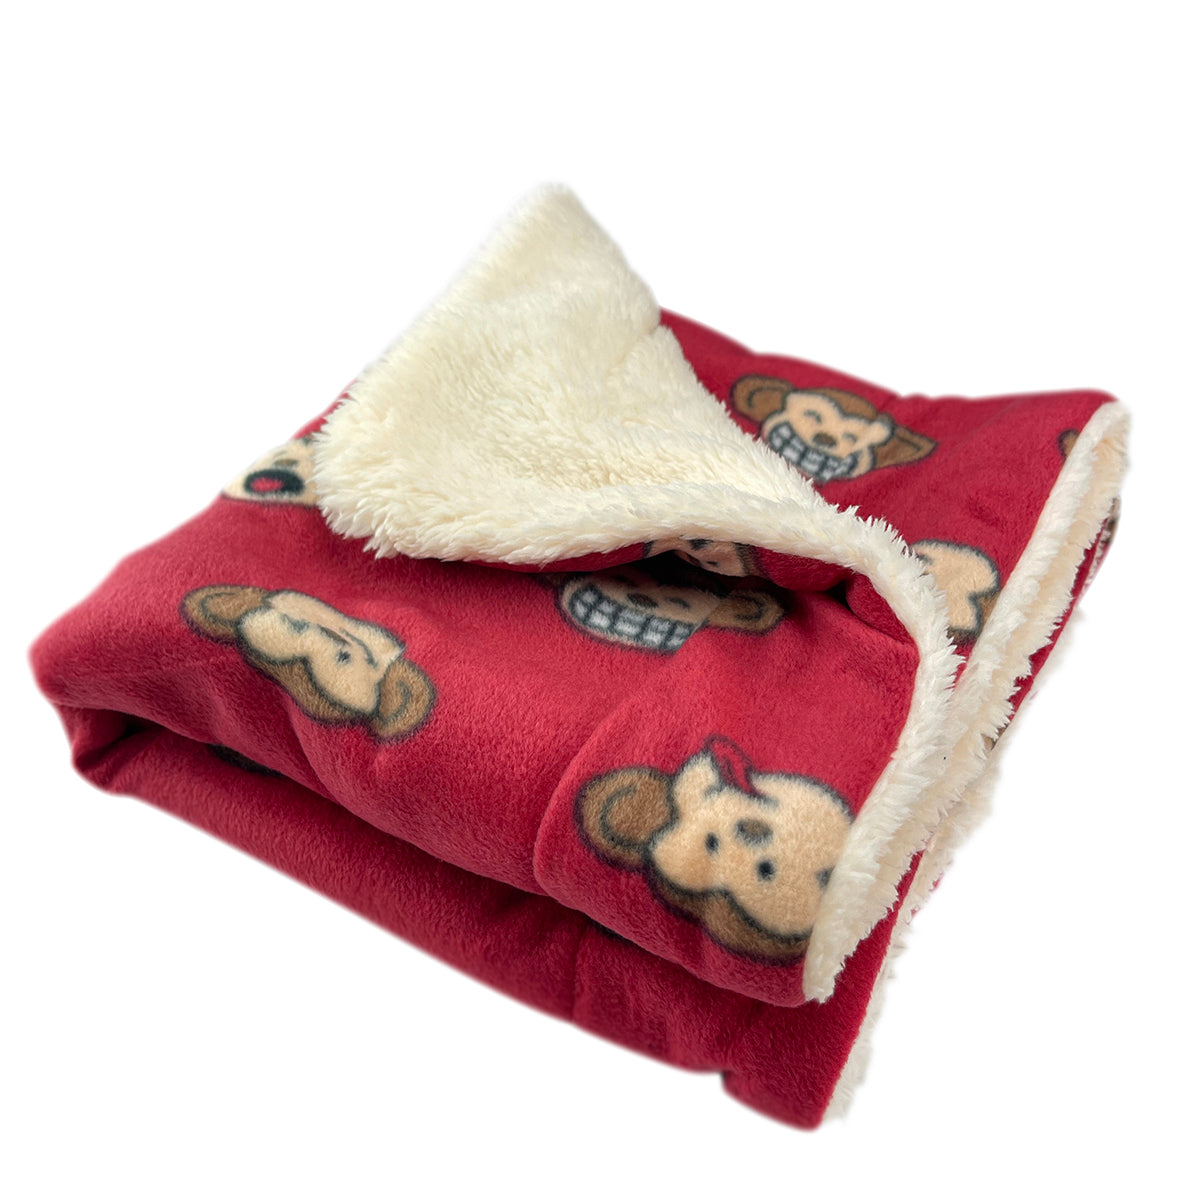 Double Layered Silly Monkey Fleece/Ultra-Plush Blanket - Burgundy